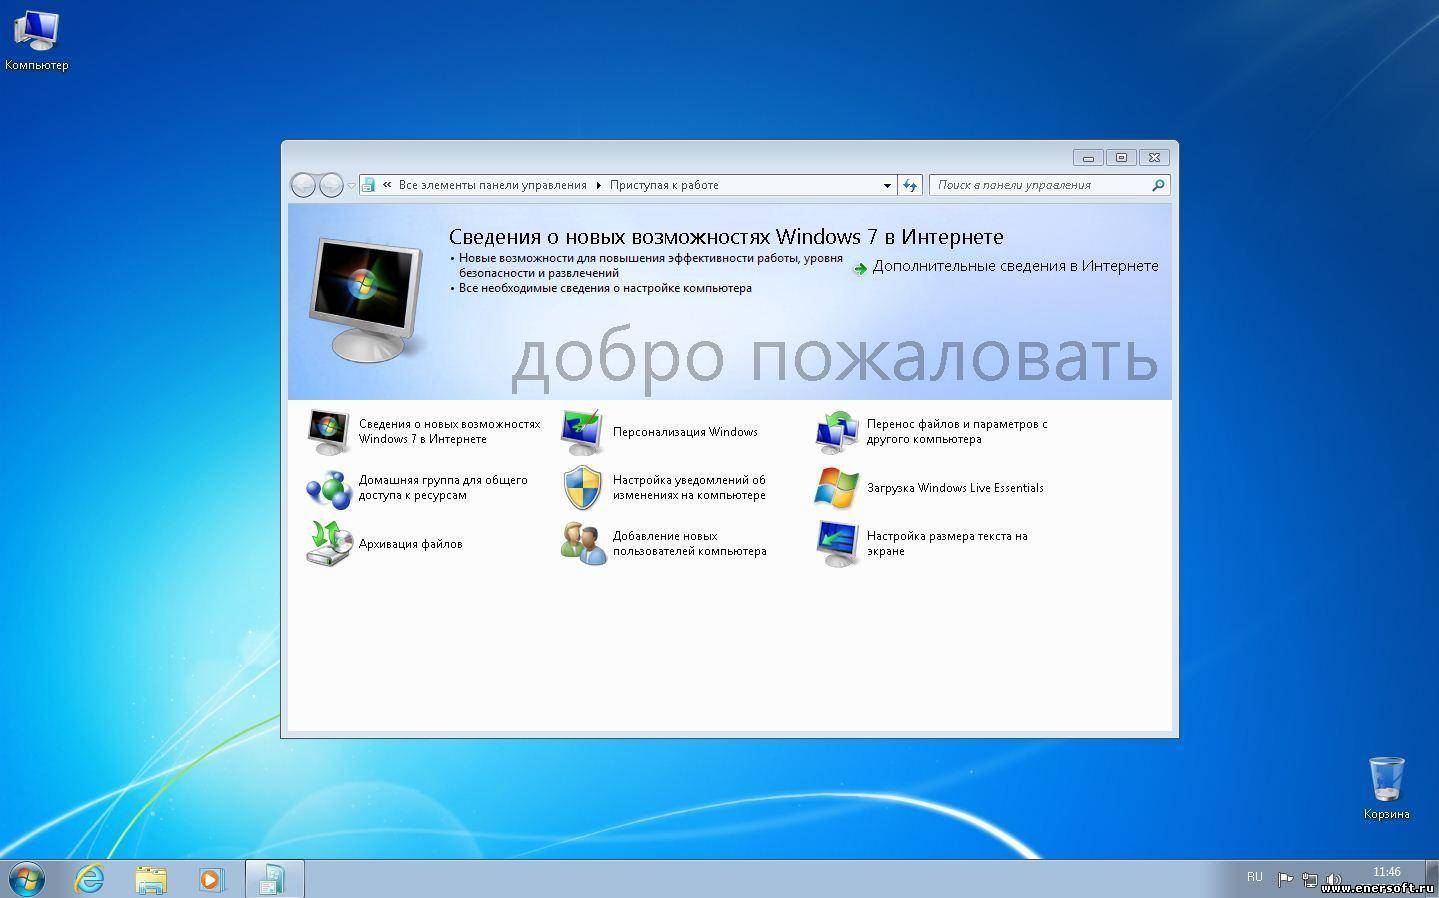 Микро windows. Windows 7 домашняя расширенная. Windows 7 Home Basic. Windows 7 Ultimate x64 URALSOFT 2011. Windows 7 Home Premium функции.